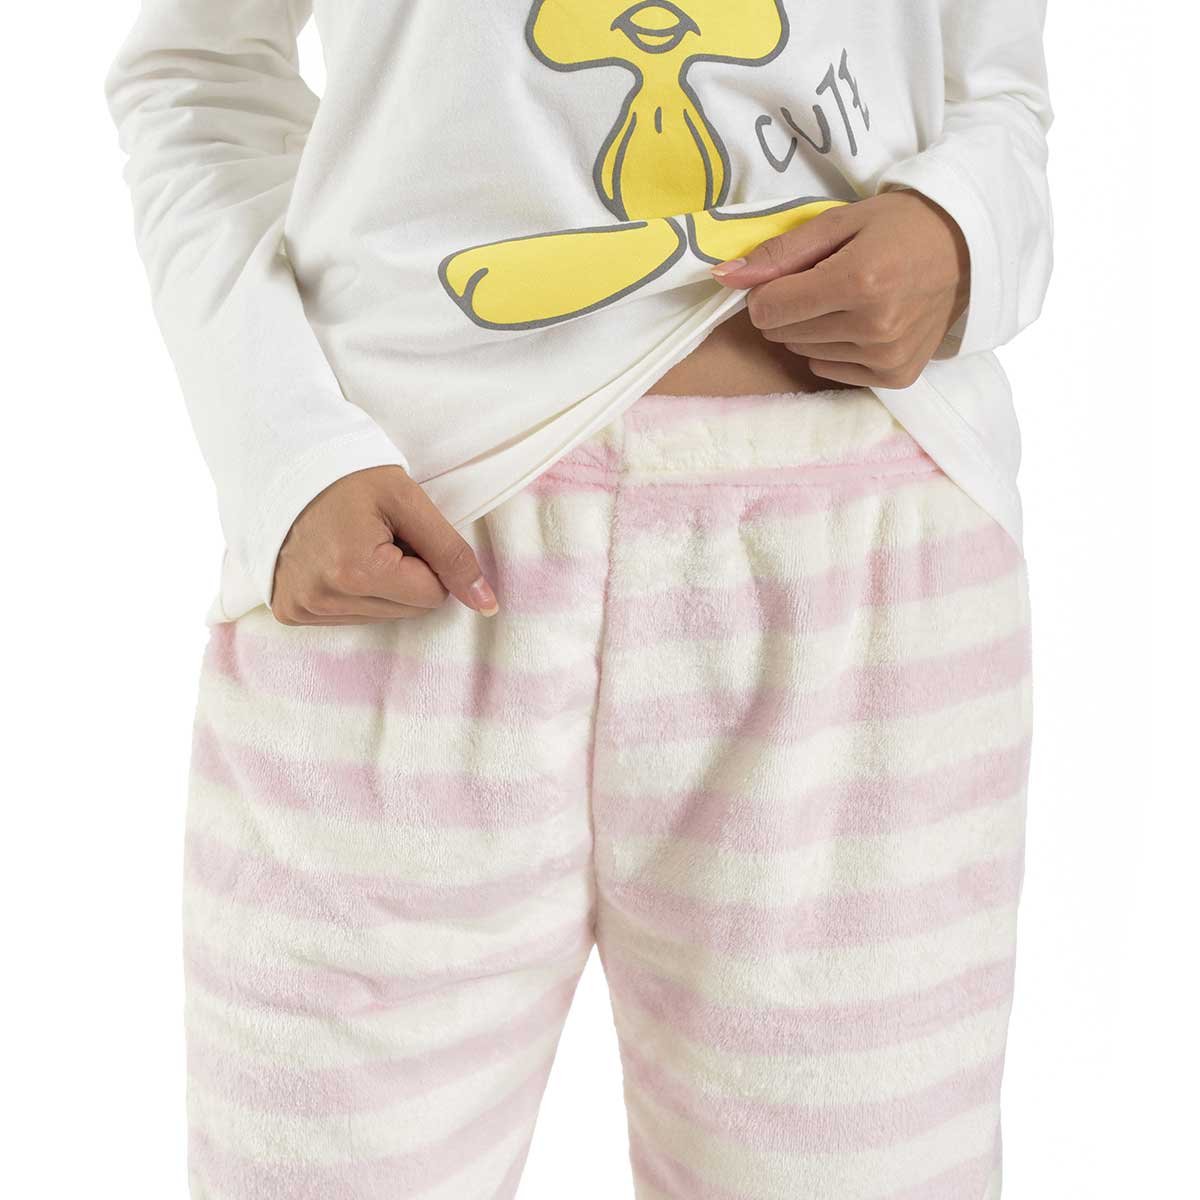 Pijama para Dama Polar Playera Y Pantal&oacute;n Looney Tunes